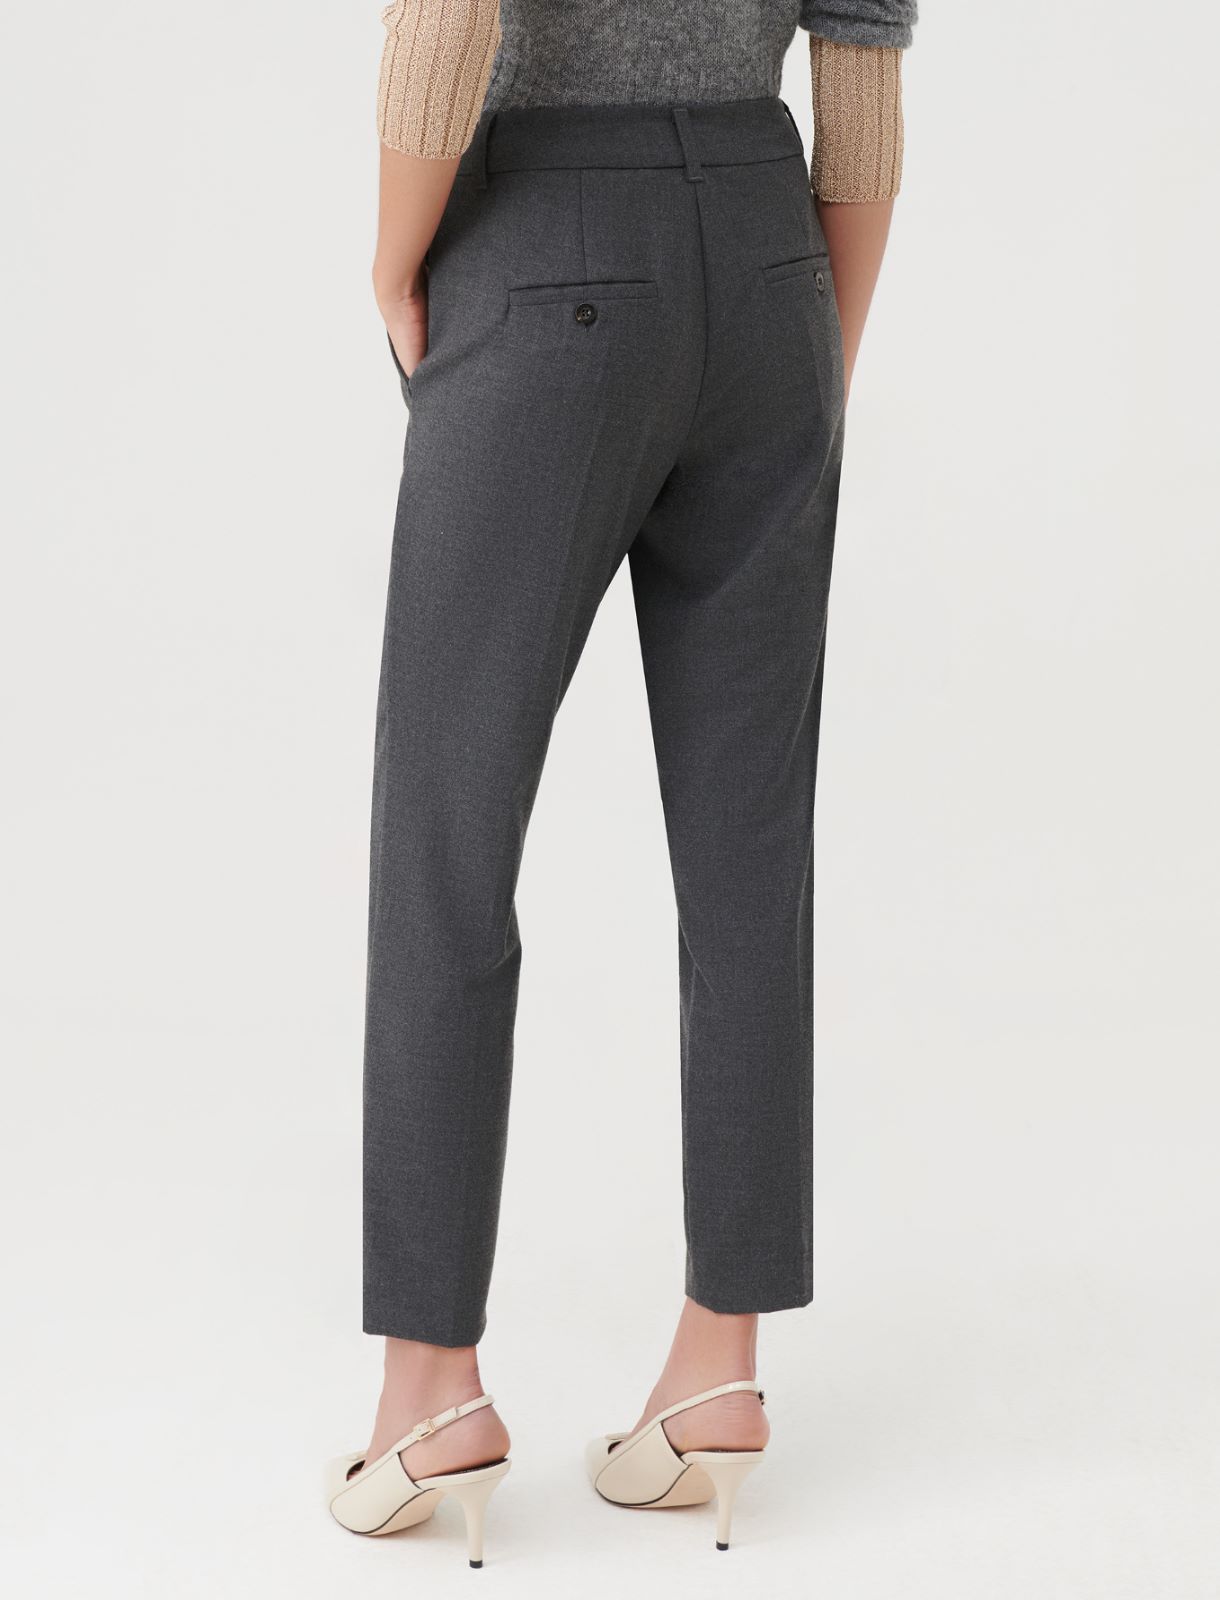 Flannel trousers - Melange grey - Marella - 2